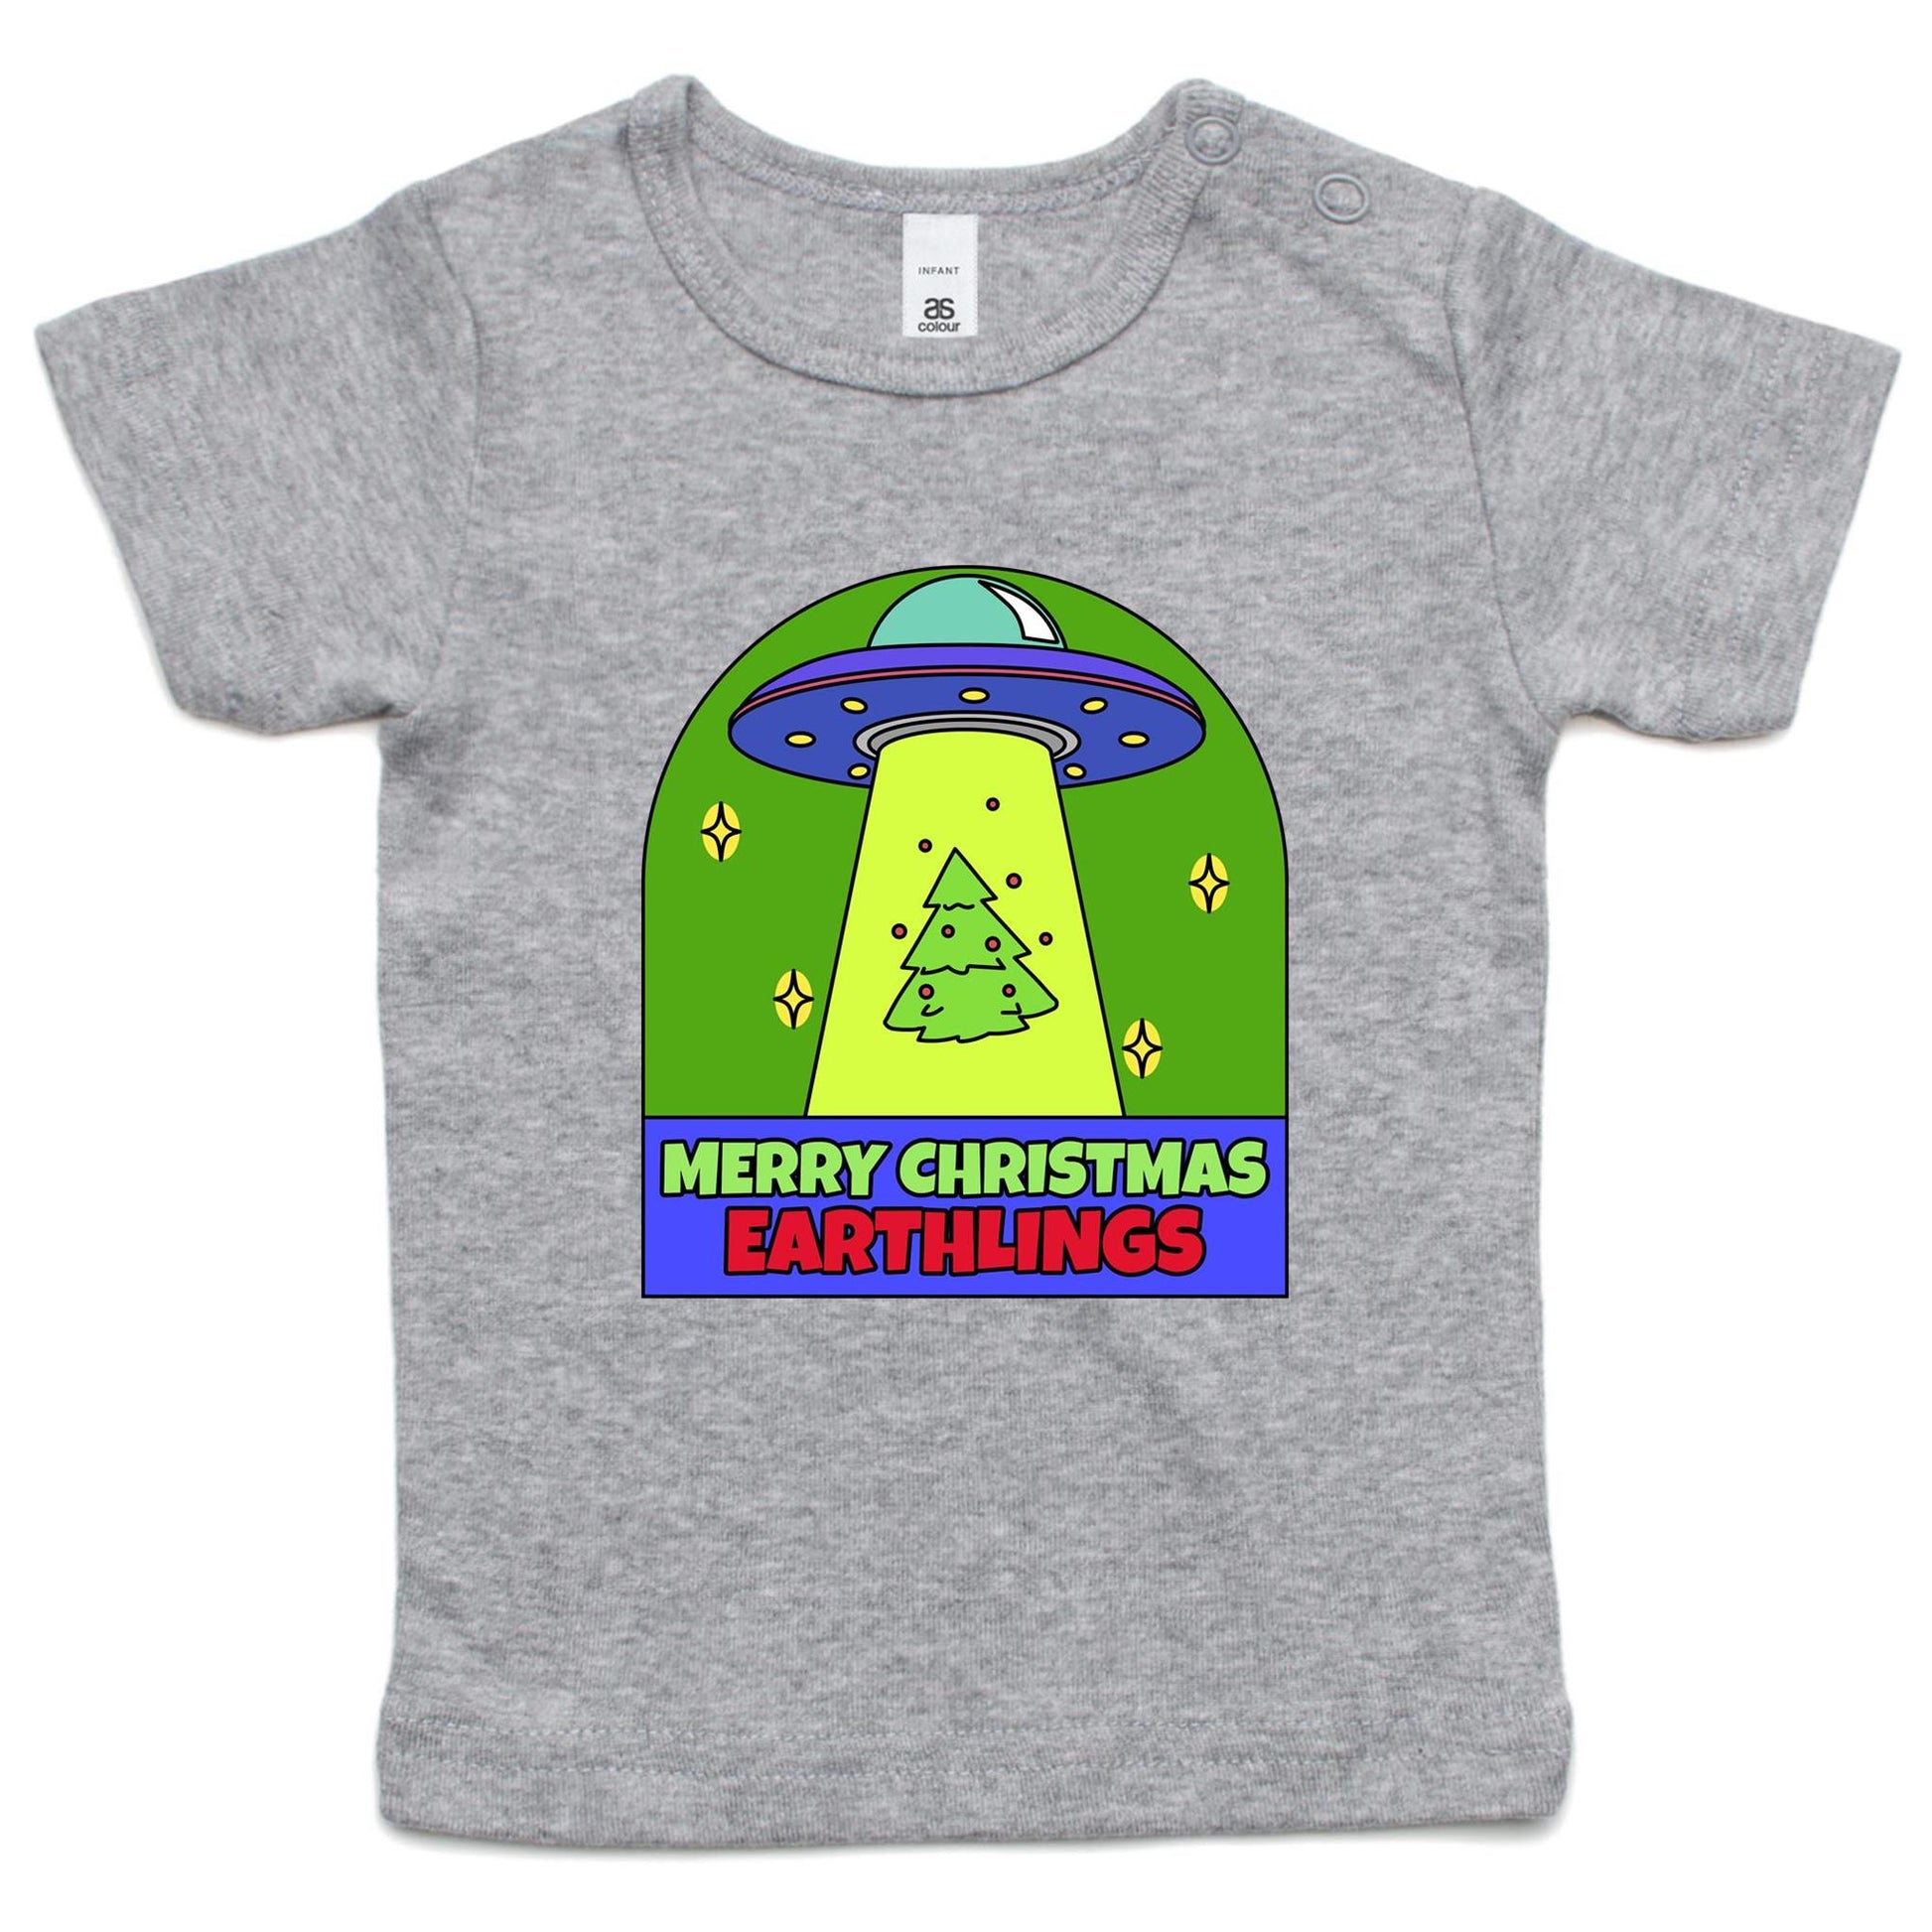 Merry Christmas Earthlings, UFO - Baby T-shirt Grey Marle Christmas Baby T-shirt Merry Christmas